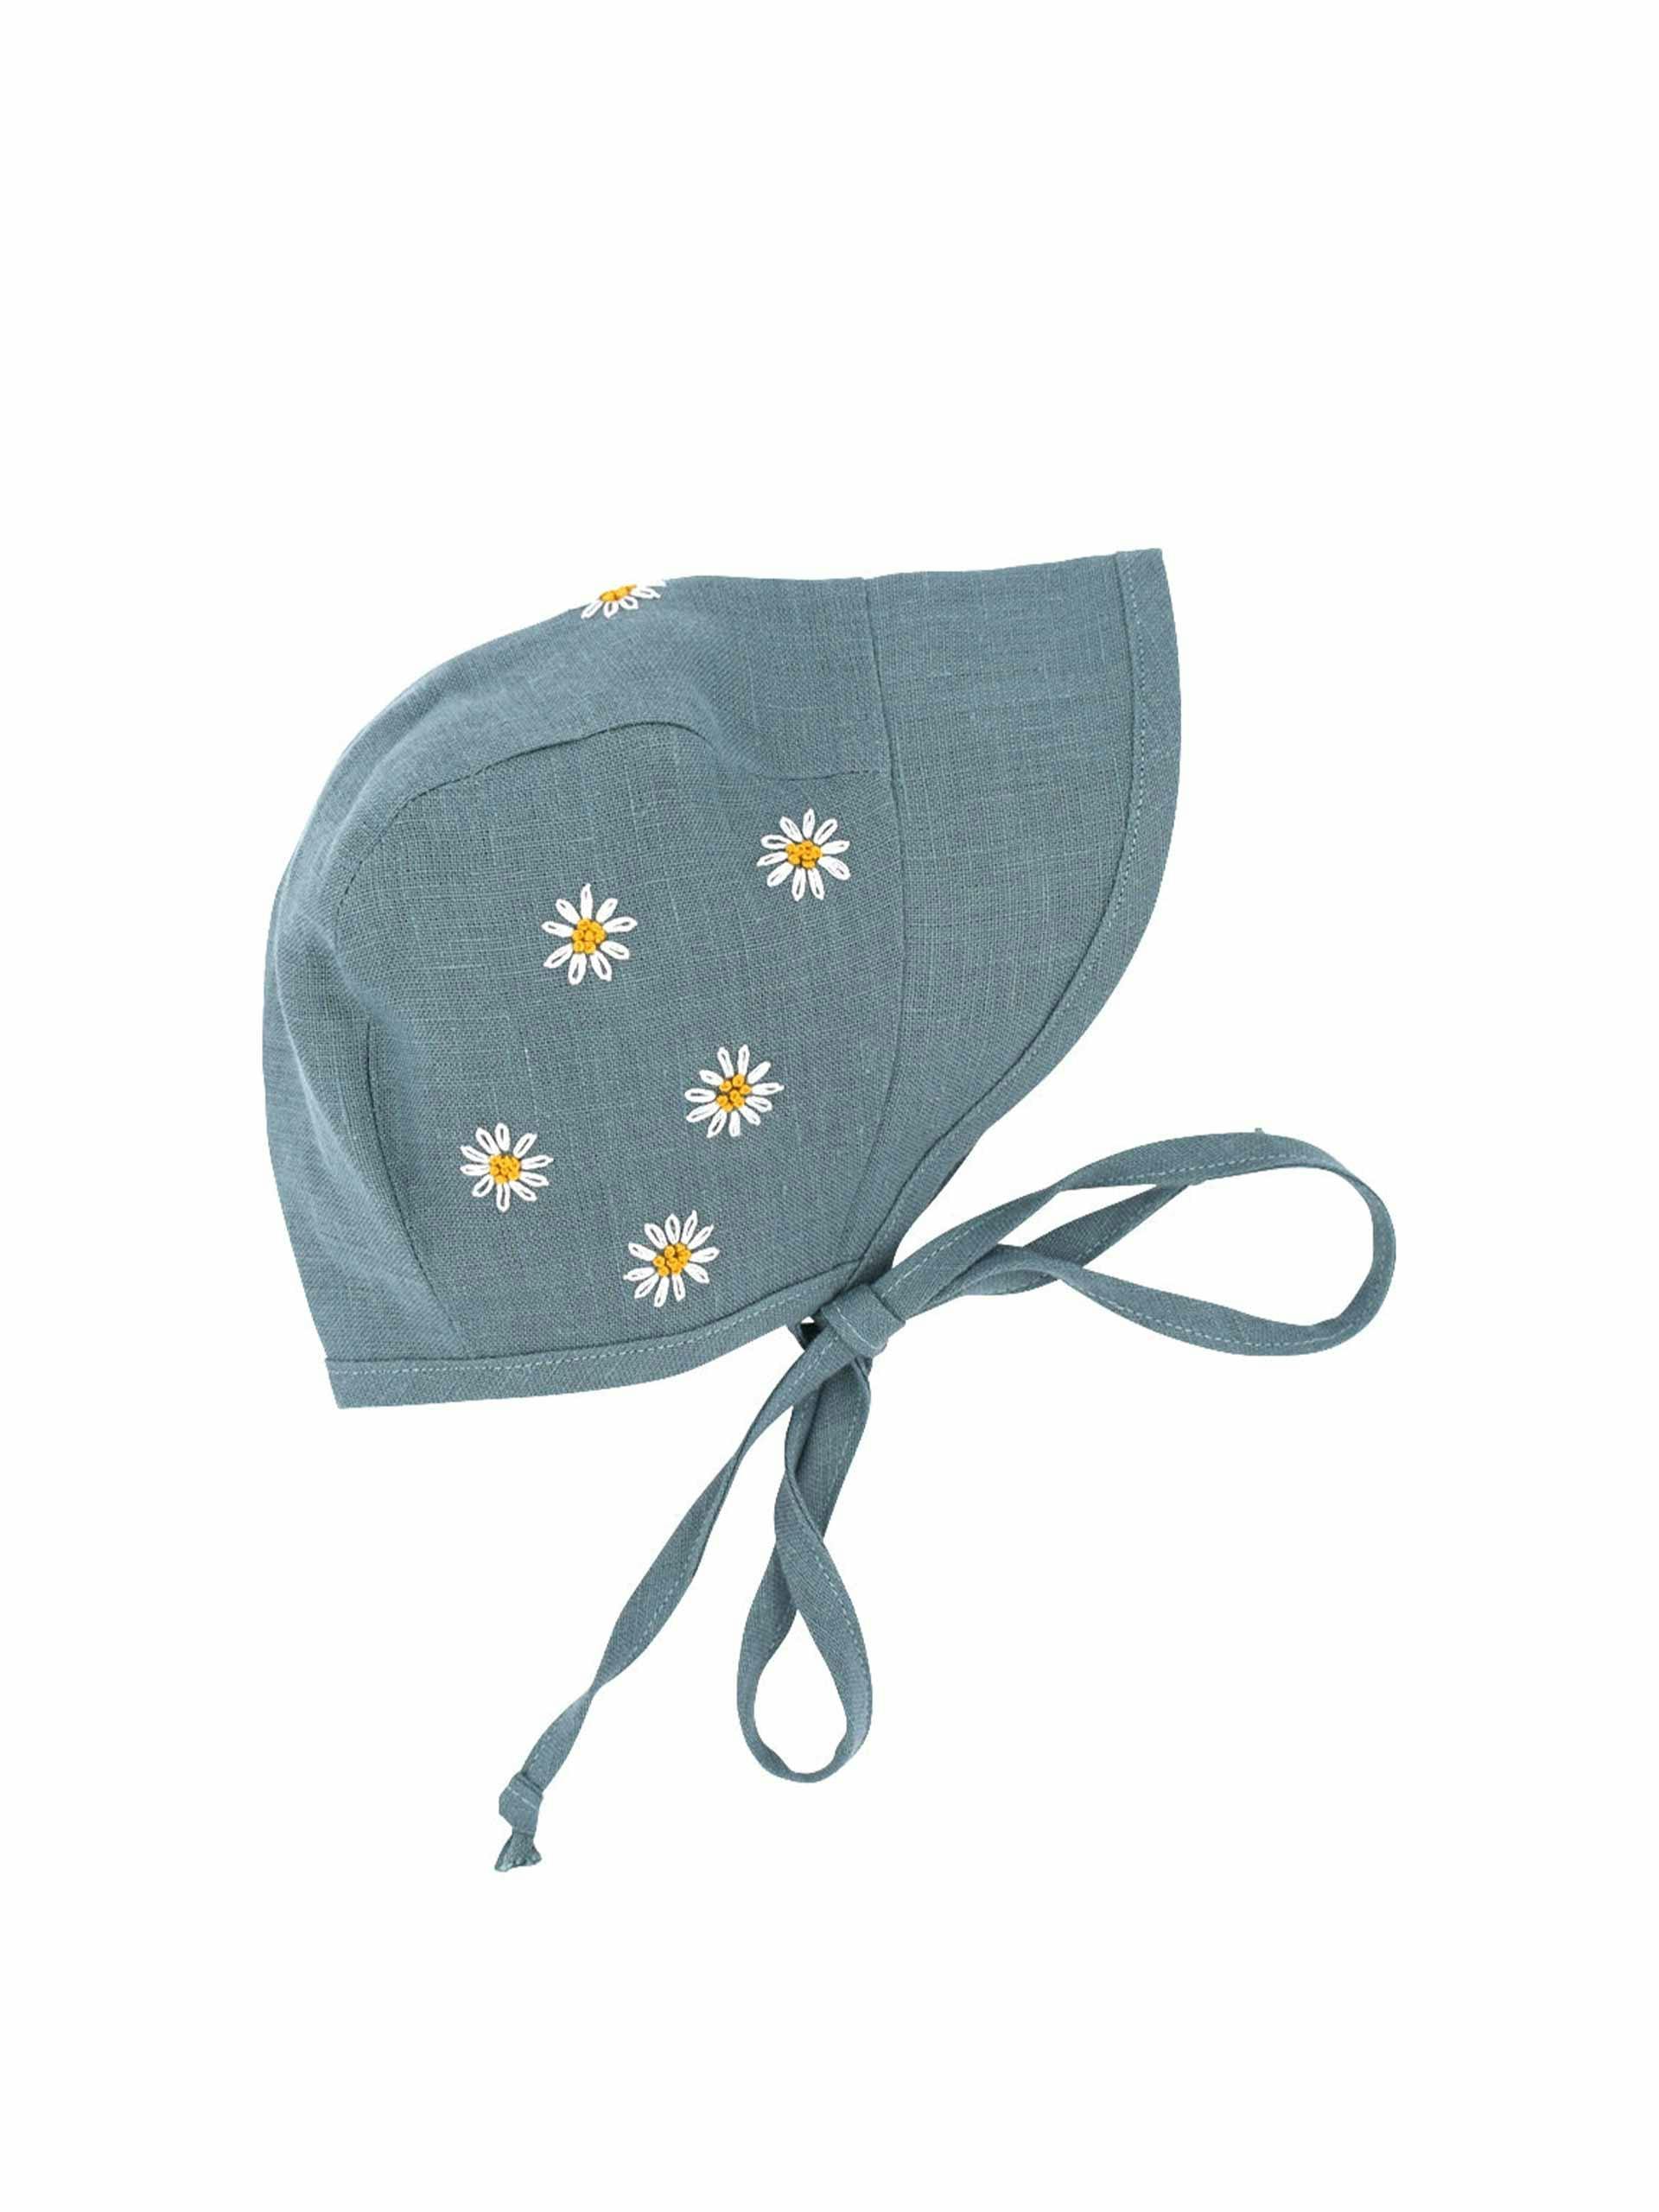 Embroidered floral linen bonnet